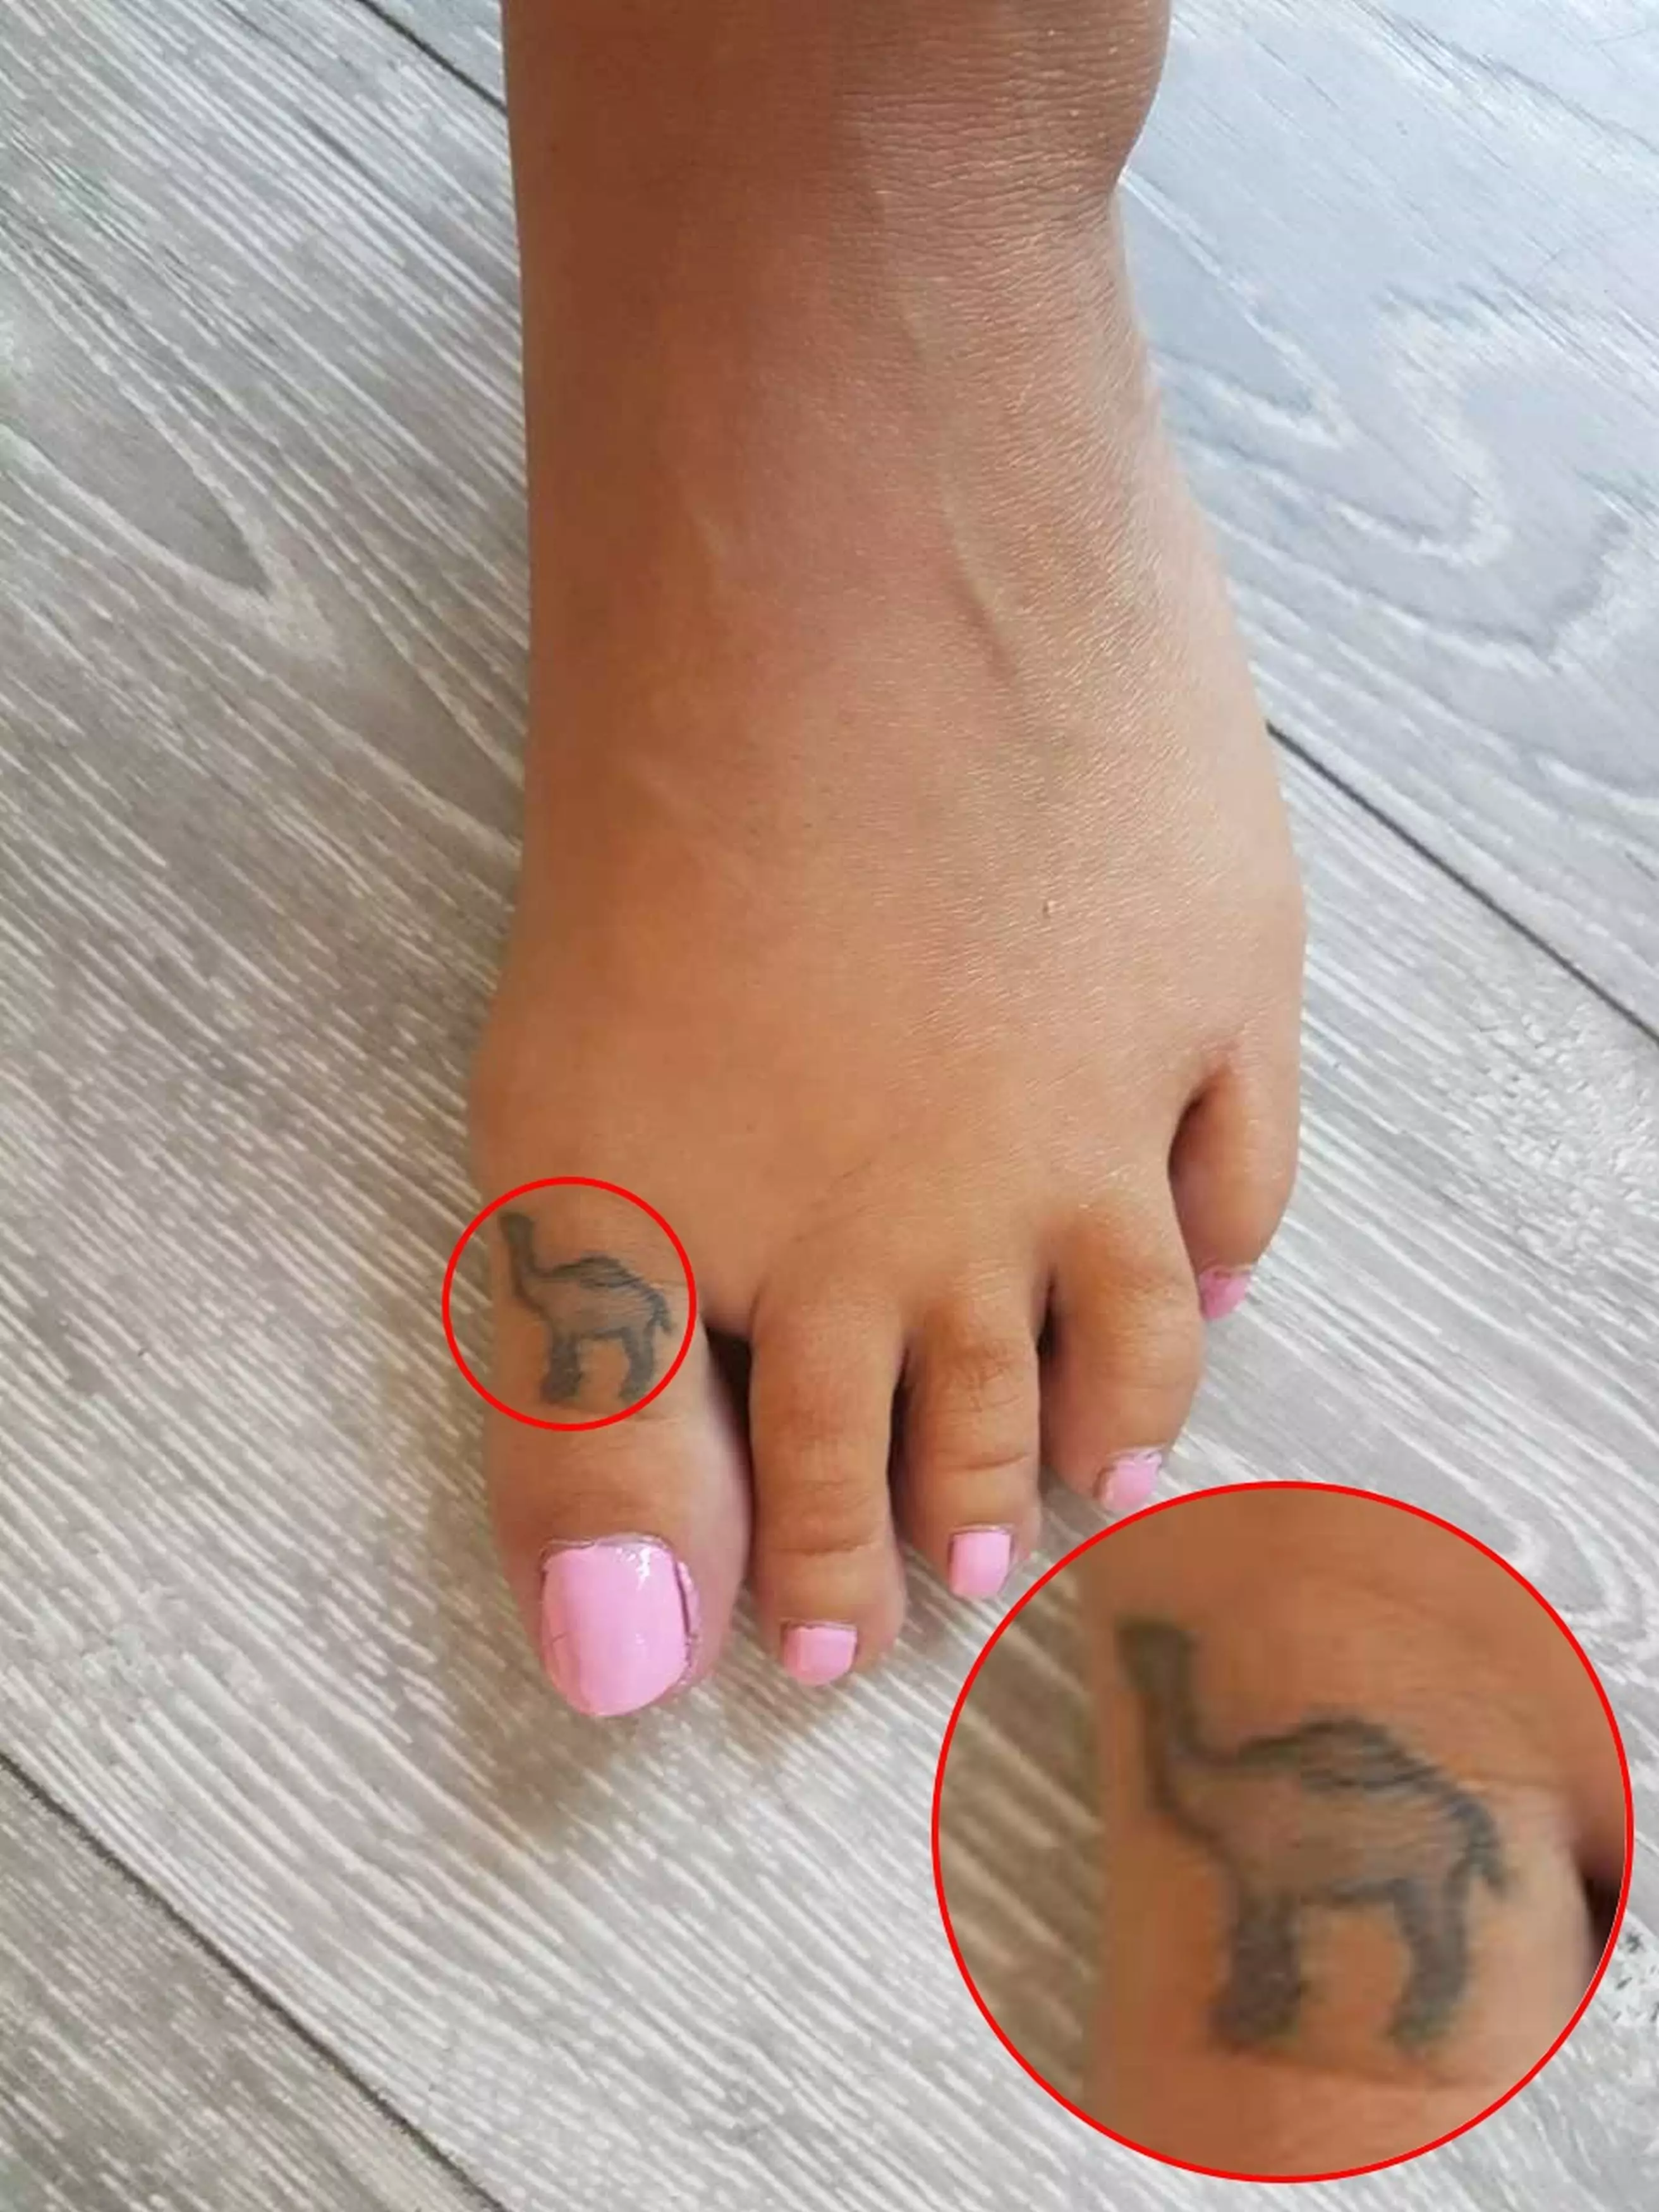 Lisa got a camel tattoo on her toe.